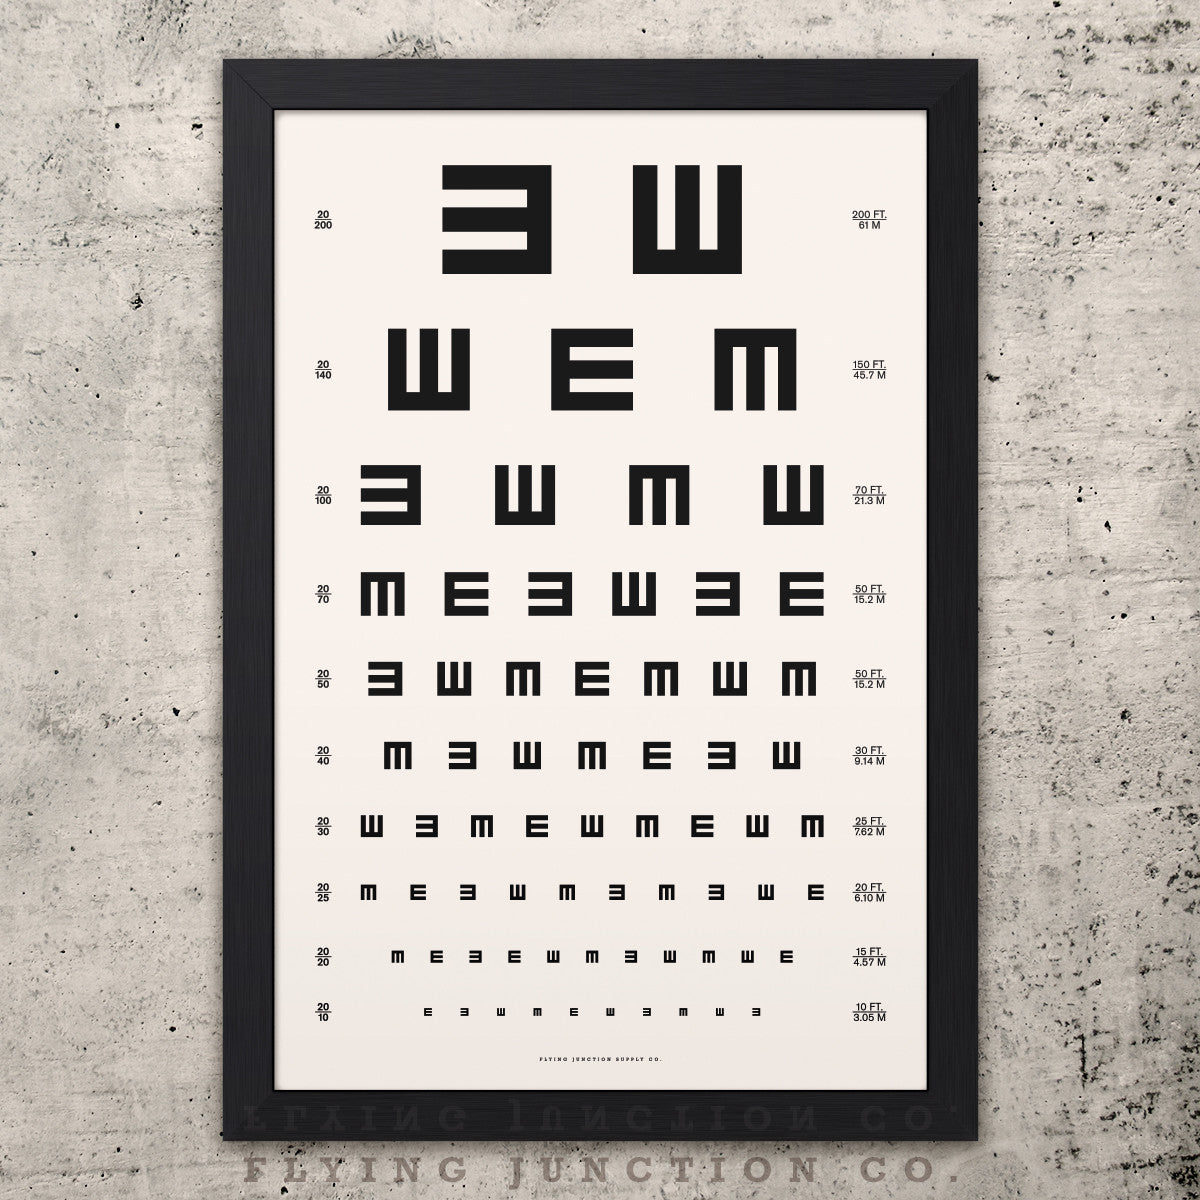 Printable Snellen Eye Charts